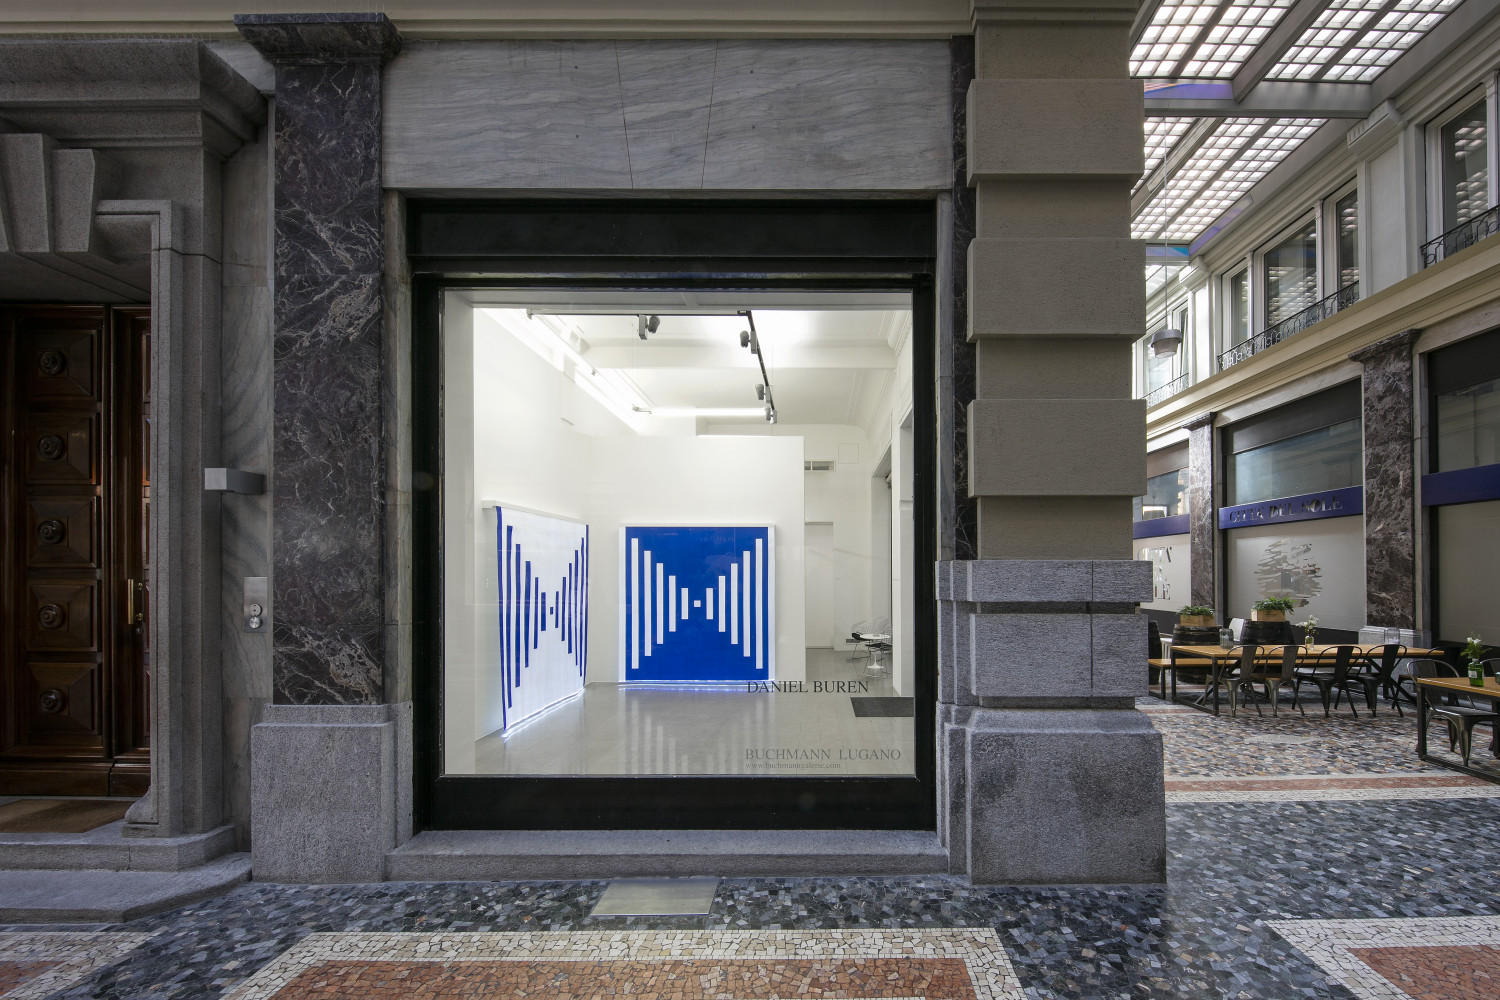 Daniel Buren, ‘DANIEL BUREN  – Fibres Optiques - Diptyque: travail situé’, Installation view, Buchmann Lugano, 2019